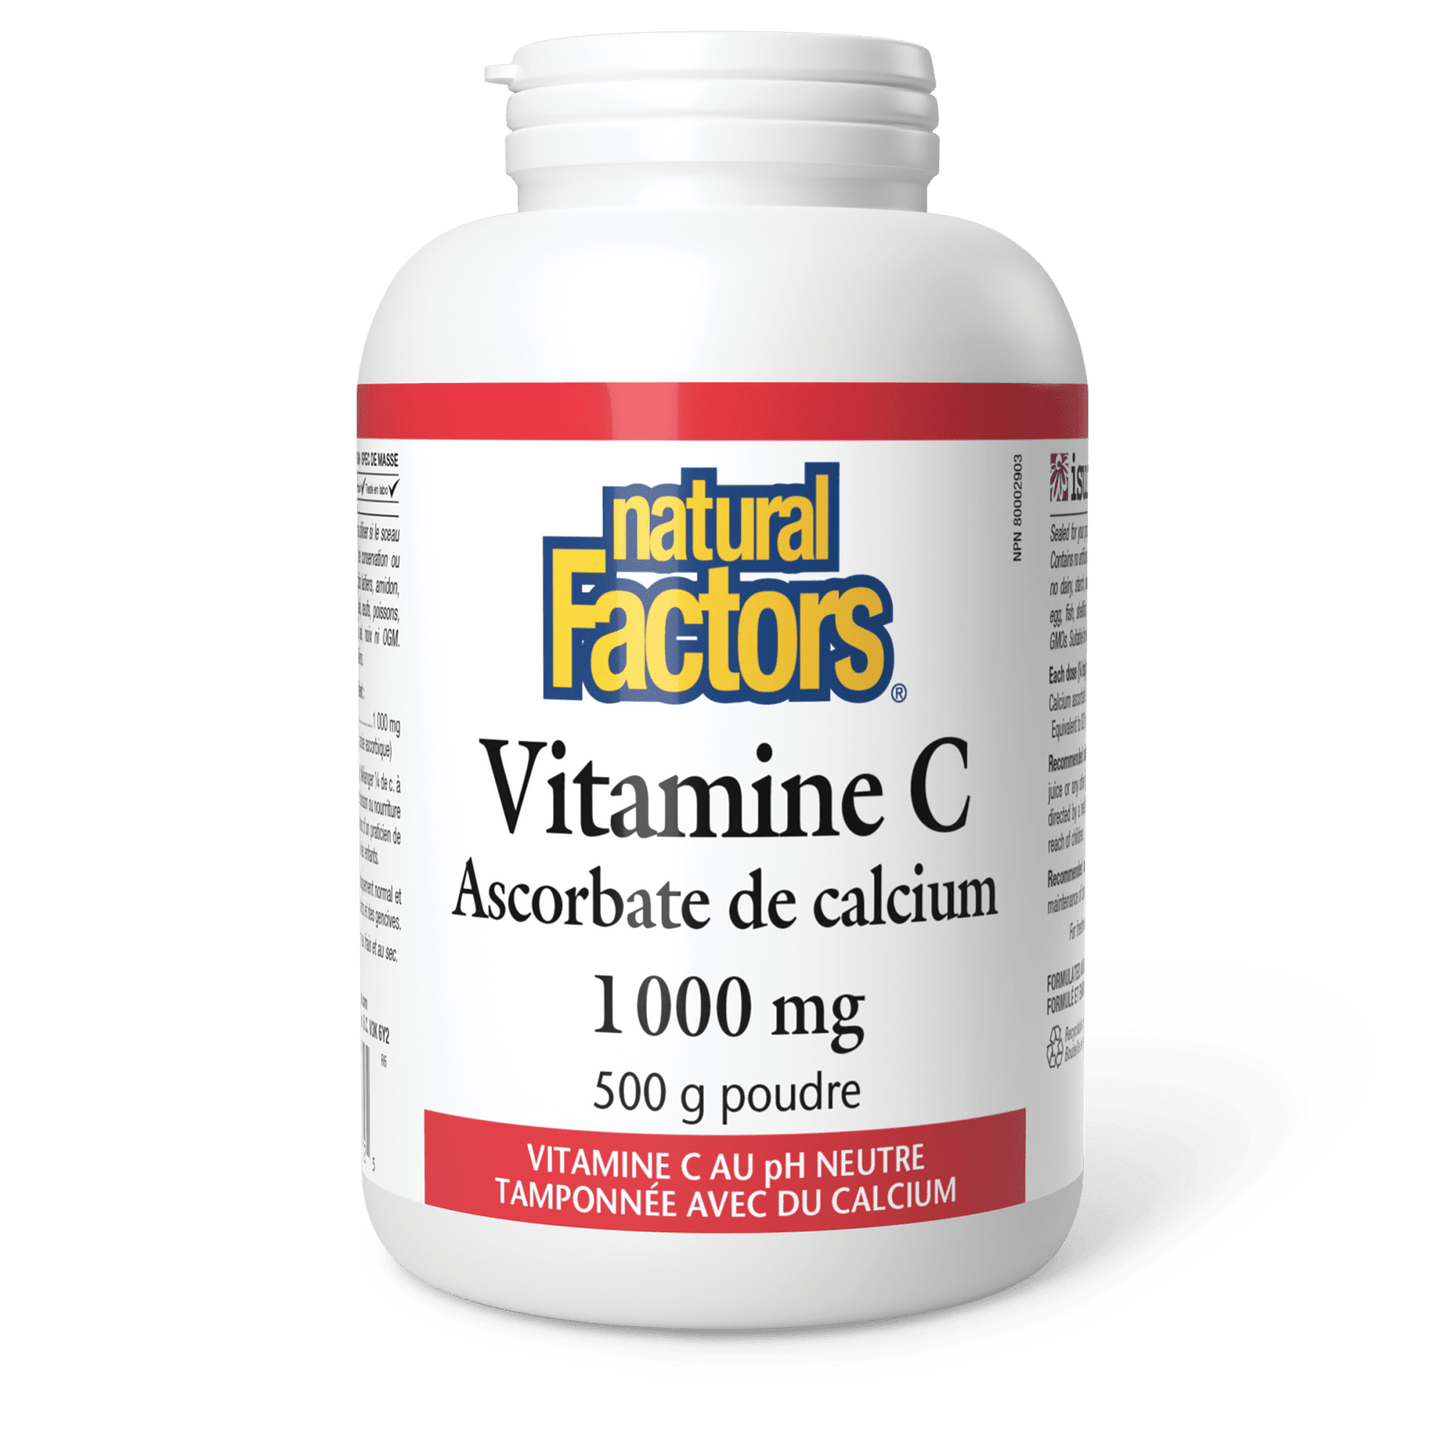 Vitamine C Ascorbate de calcium 1 000 mg, Natural Factors|v|image|1372